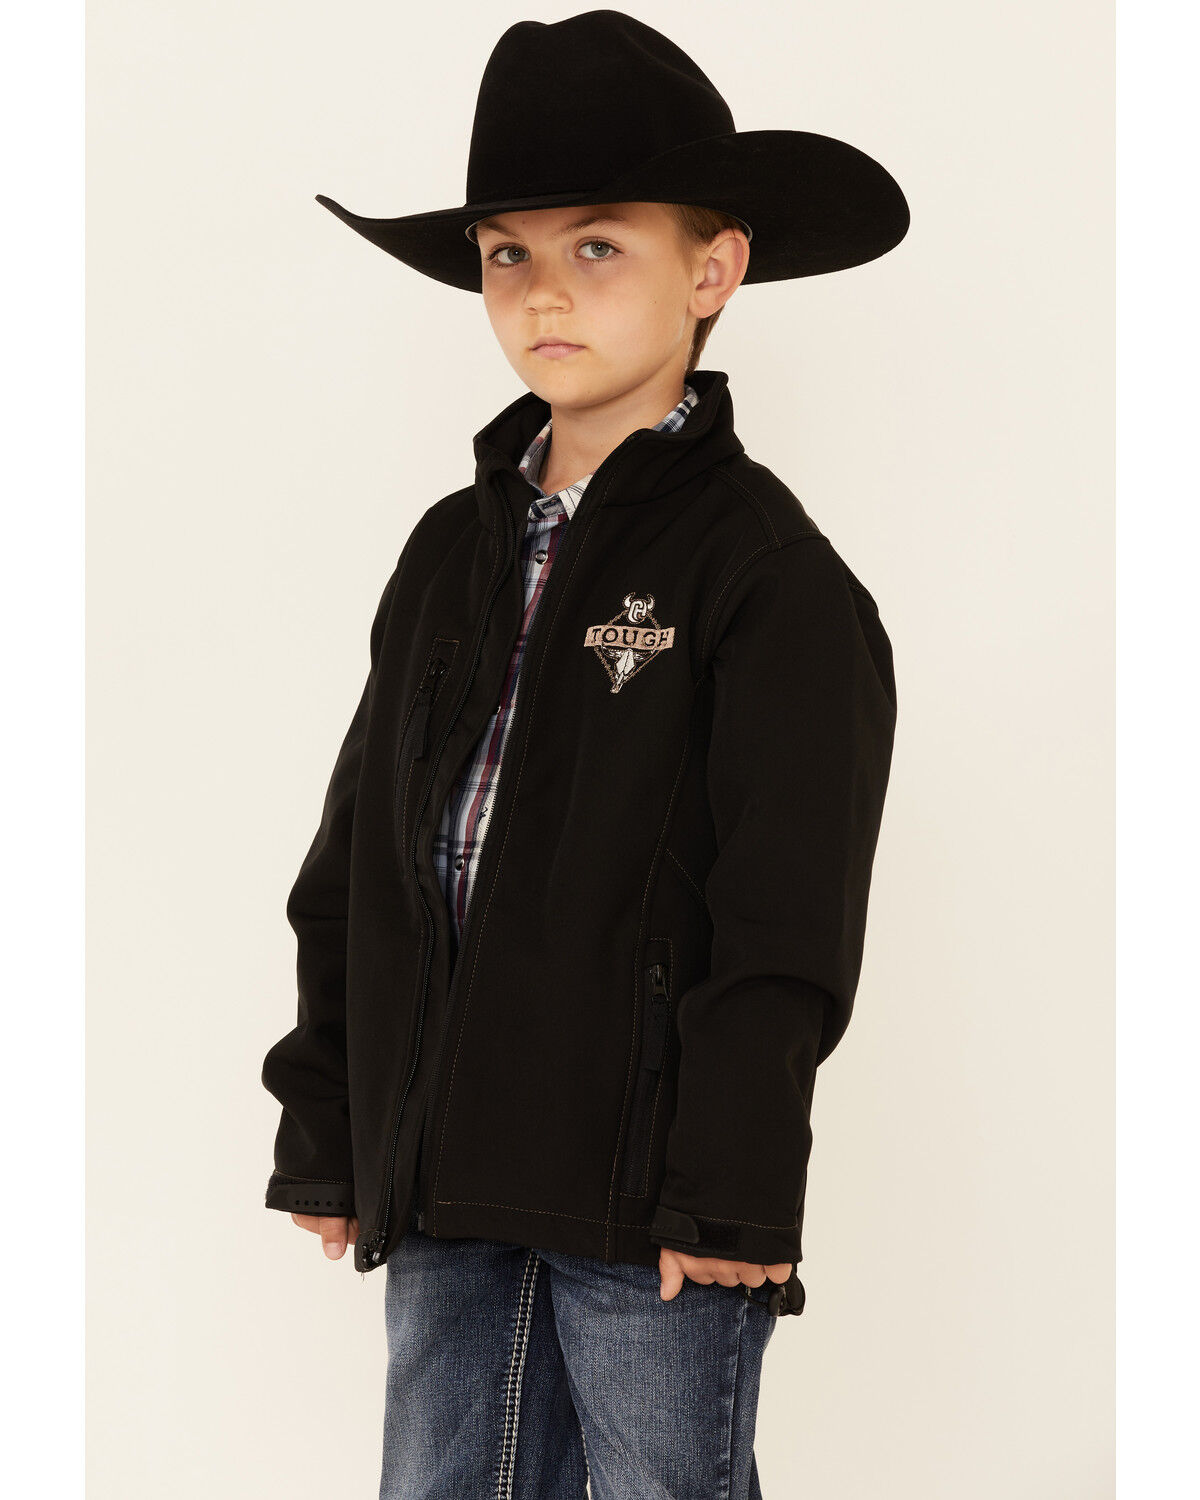 Cowboy Hardware Boys Heather Navy Tough Vest 387100-484